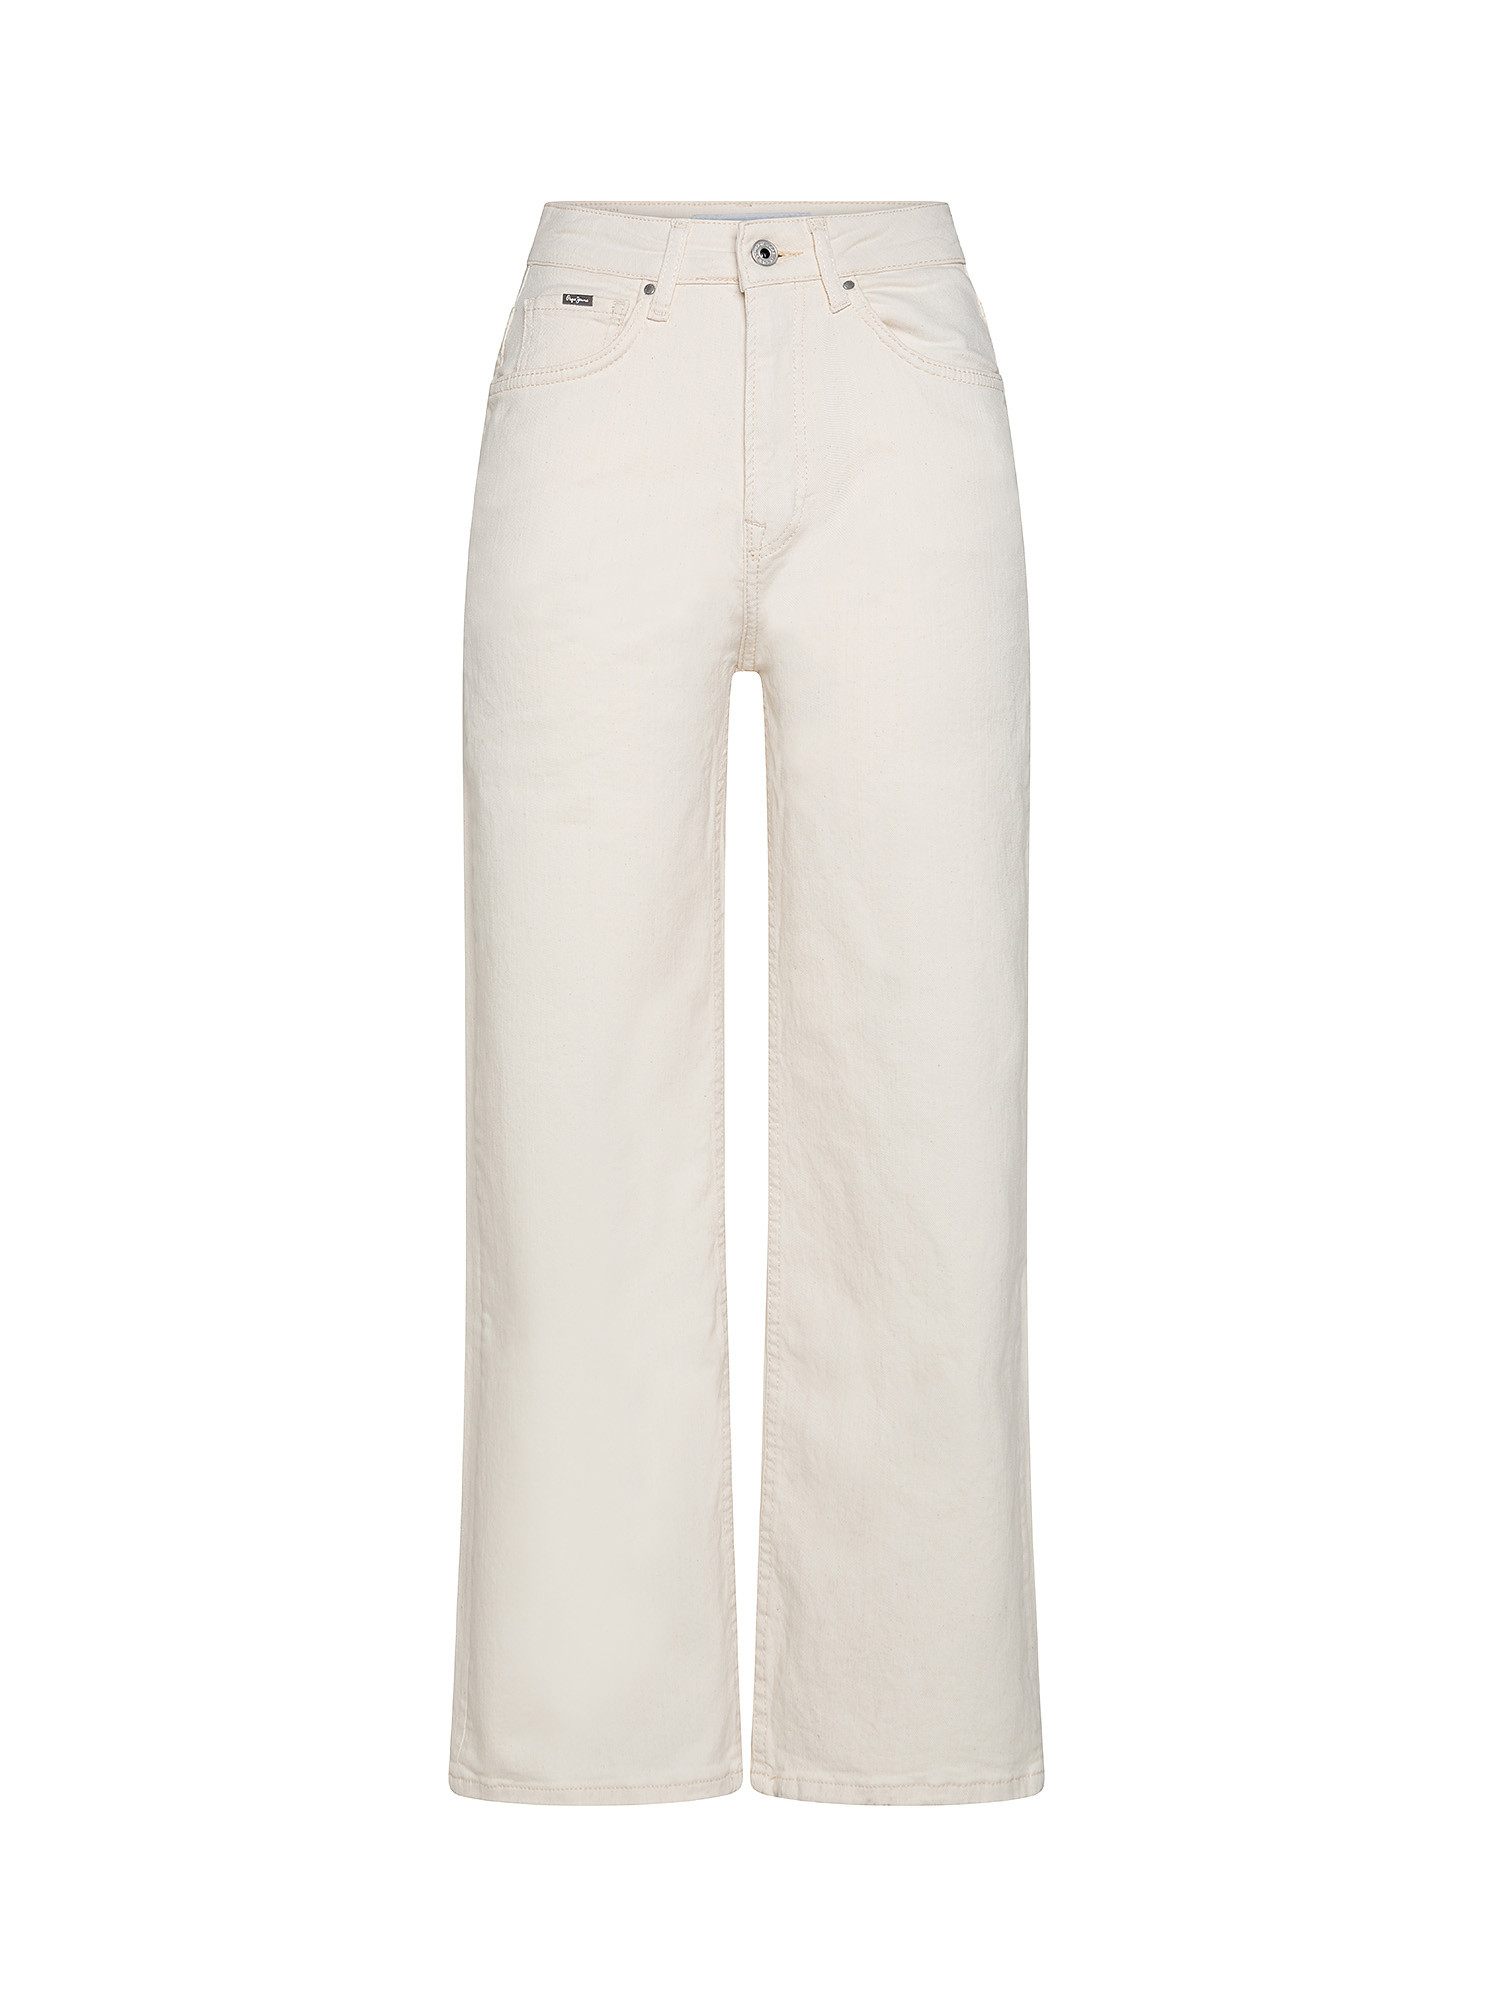 Jeans Lexa sky, taglio wide a vita alta., Bianco panna, large image number 0